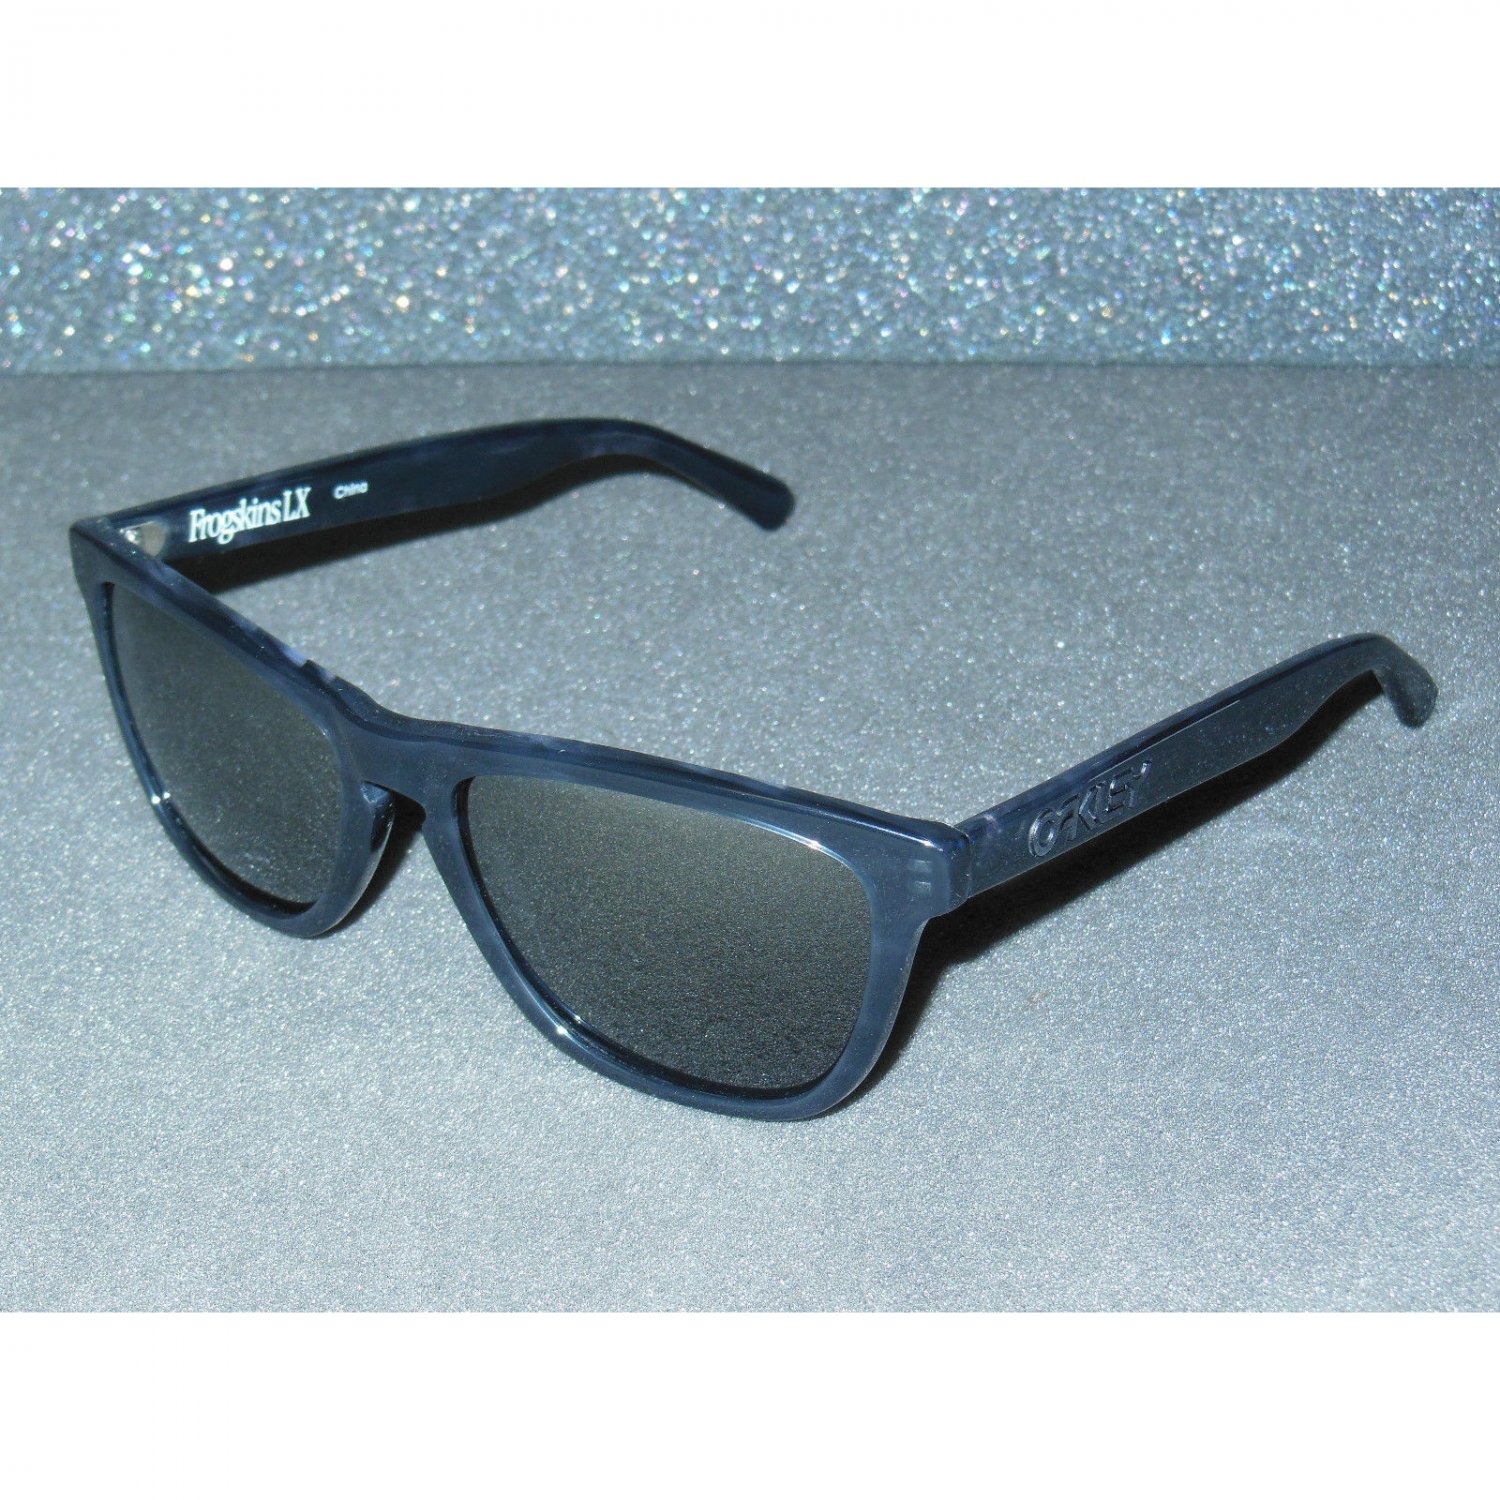 Oakley Frogskins Sunglasses Dark Grey Iridium